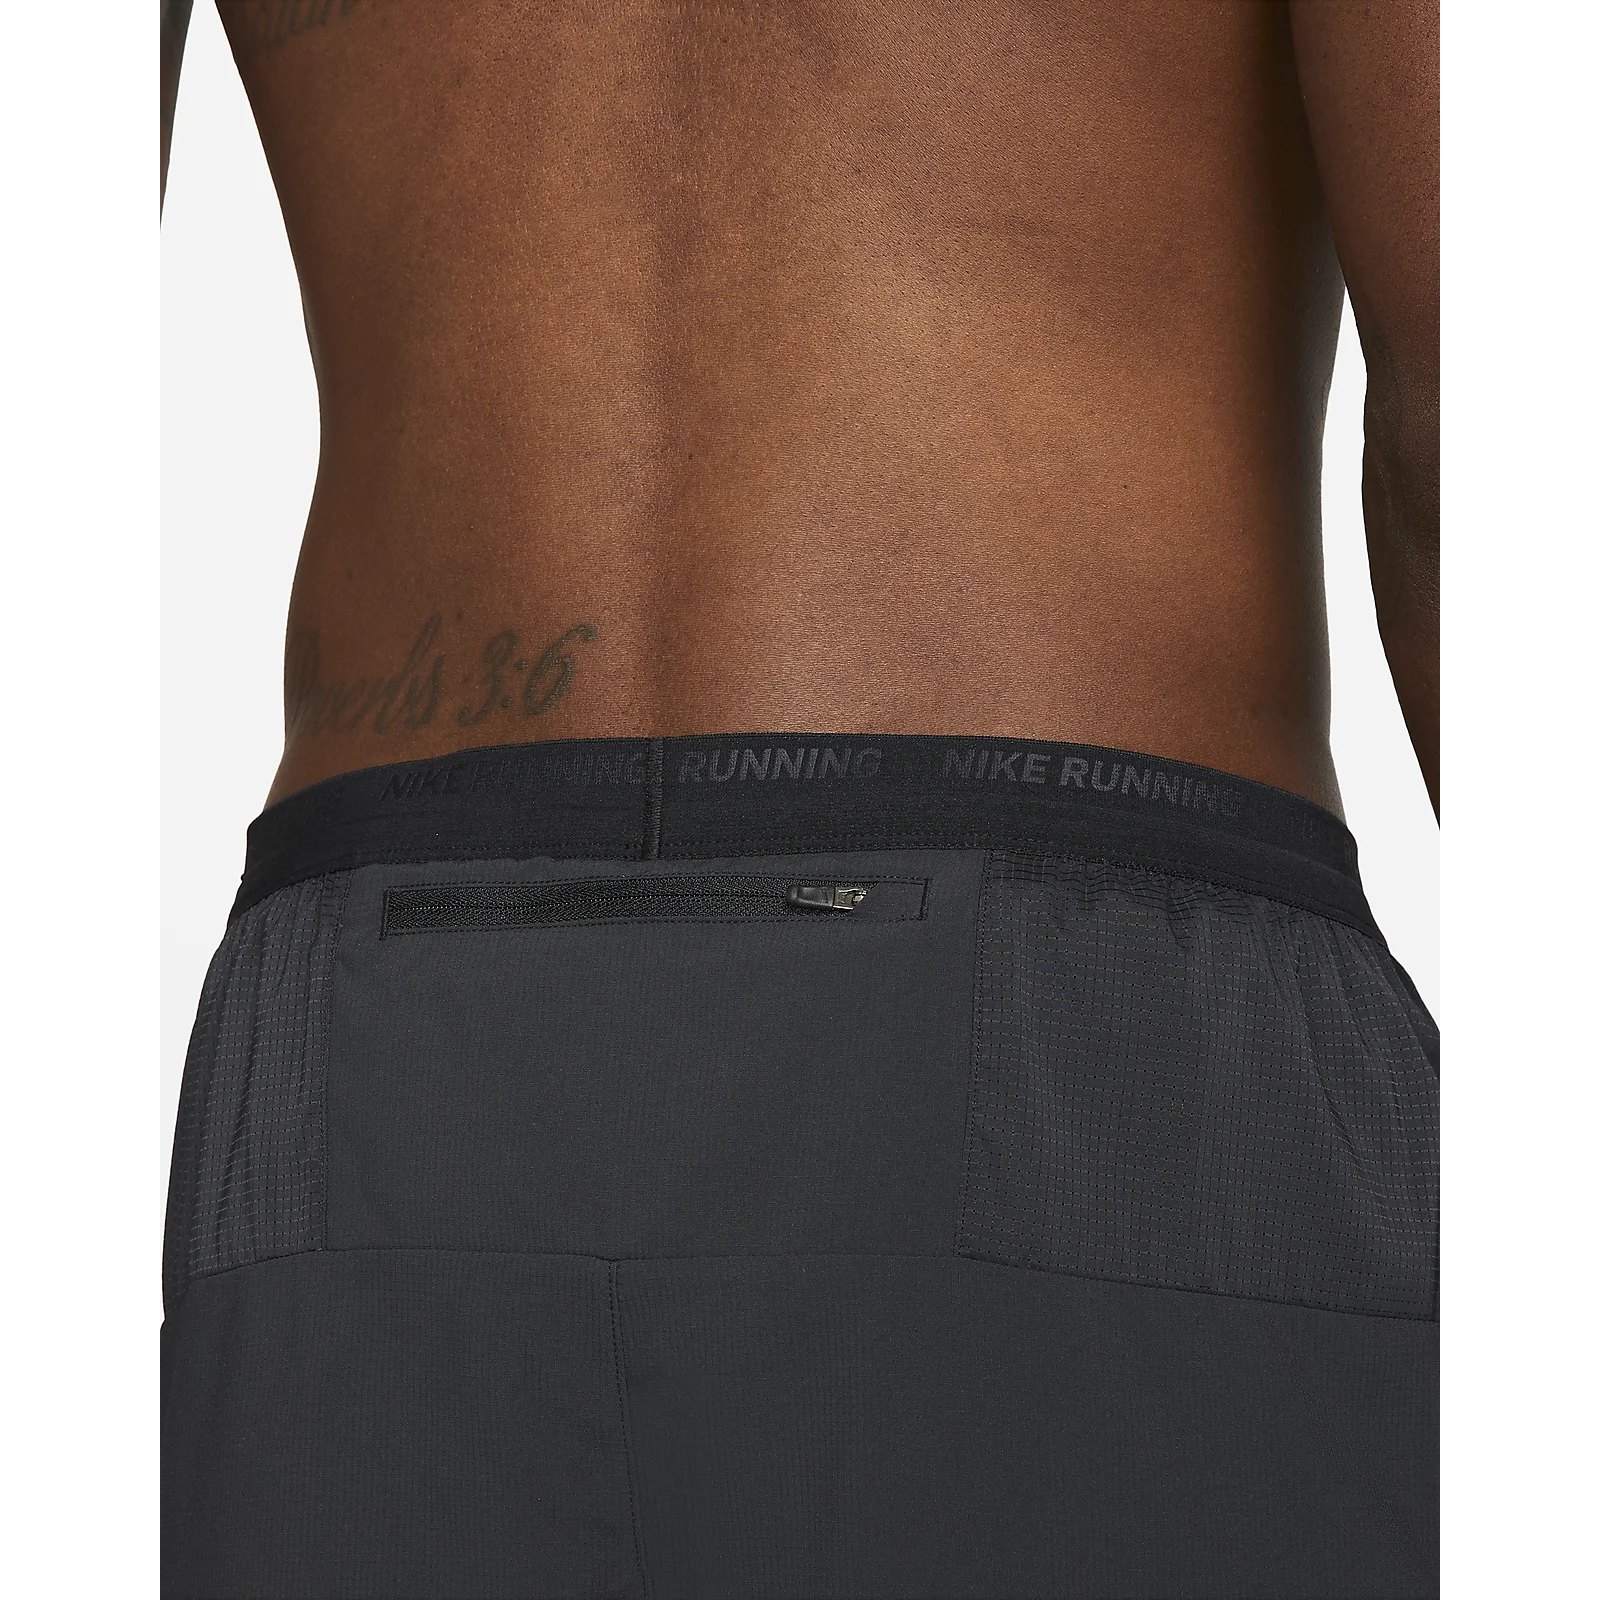 Nike Dri-FIT Stride 5 Brief-Lined Running Shorts Men -  black/black/reflective silver DM4755-010